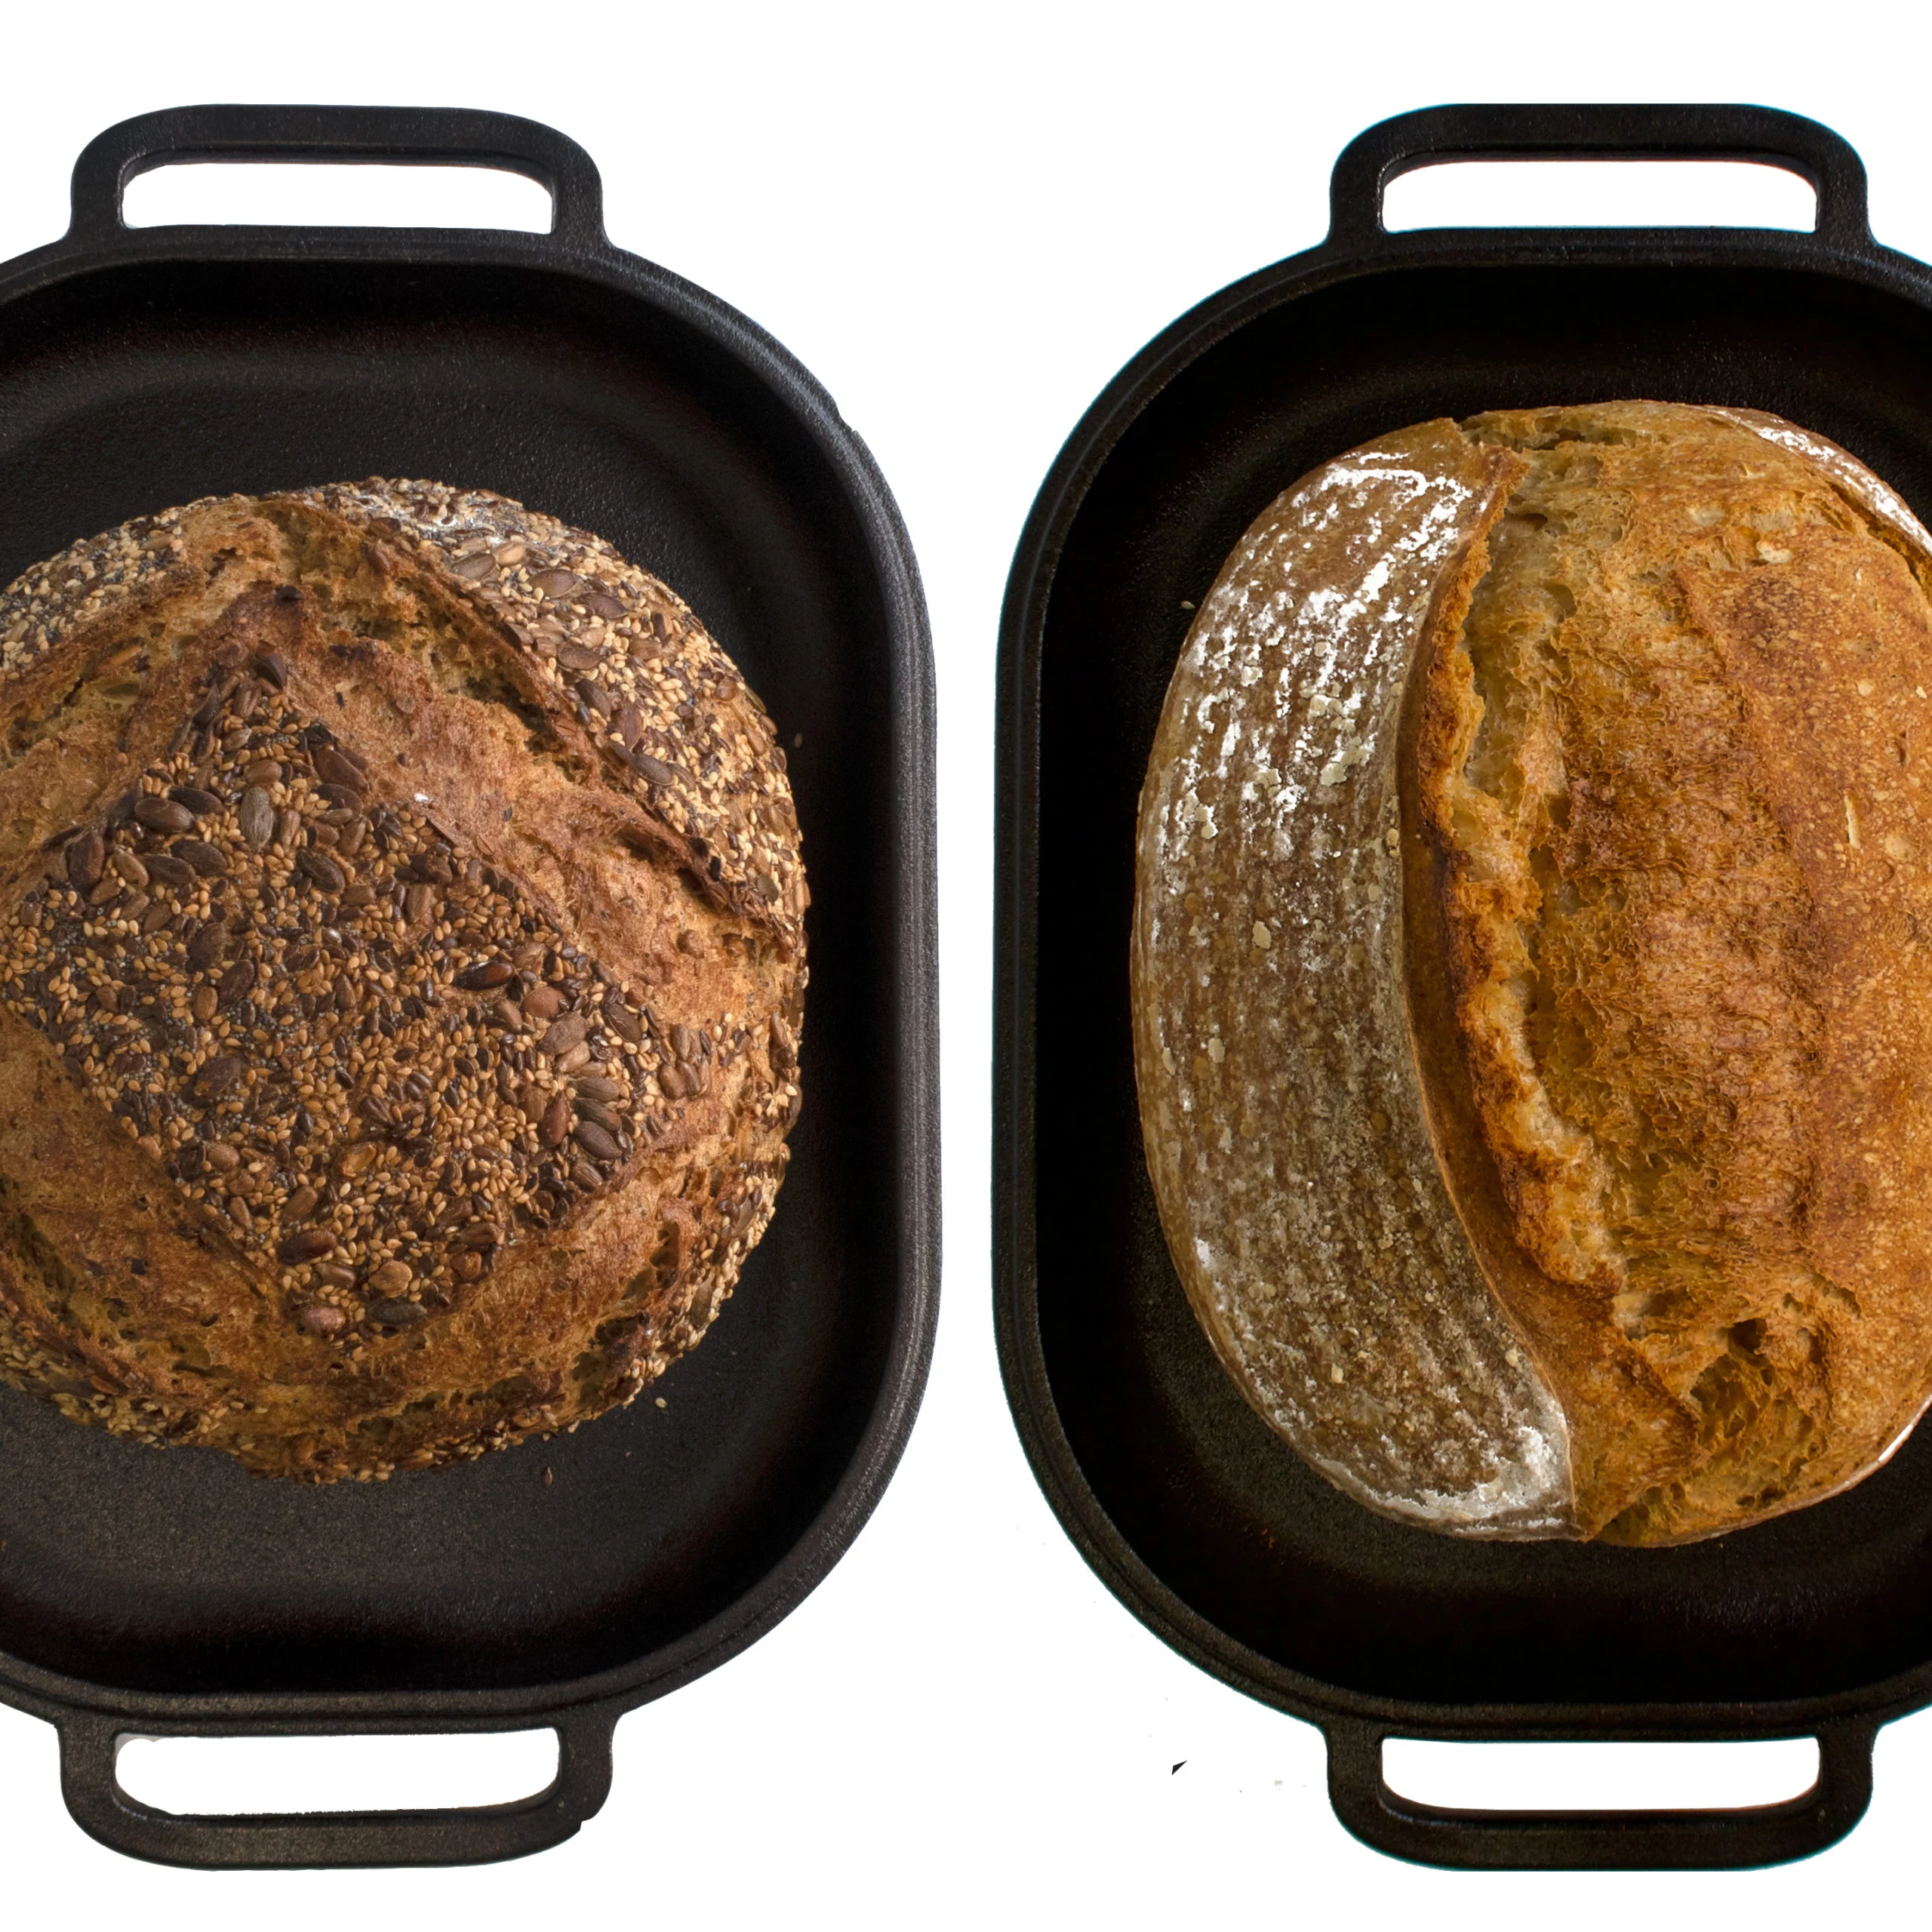 https://www.deliverdeli.com/wp-content/uploads/2020/10/Challenger-bread-pan-with-bread-scaled-jpg.webp